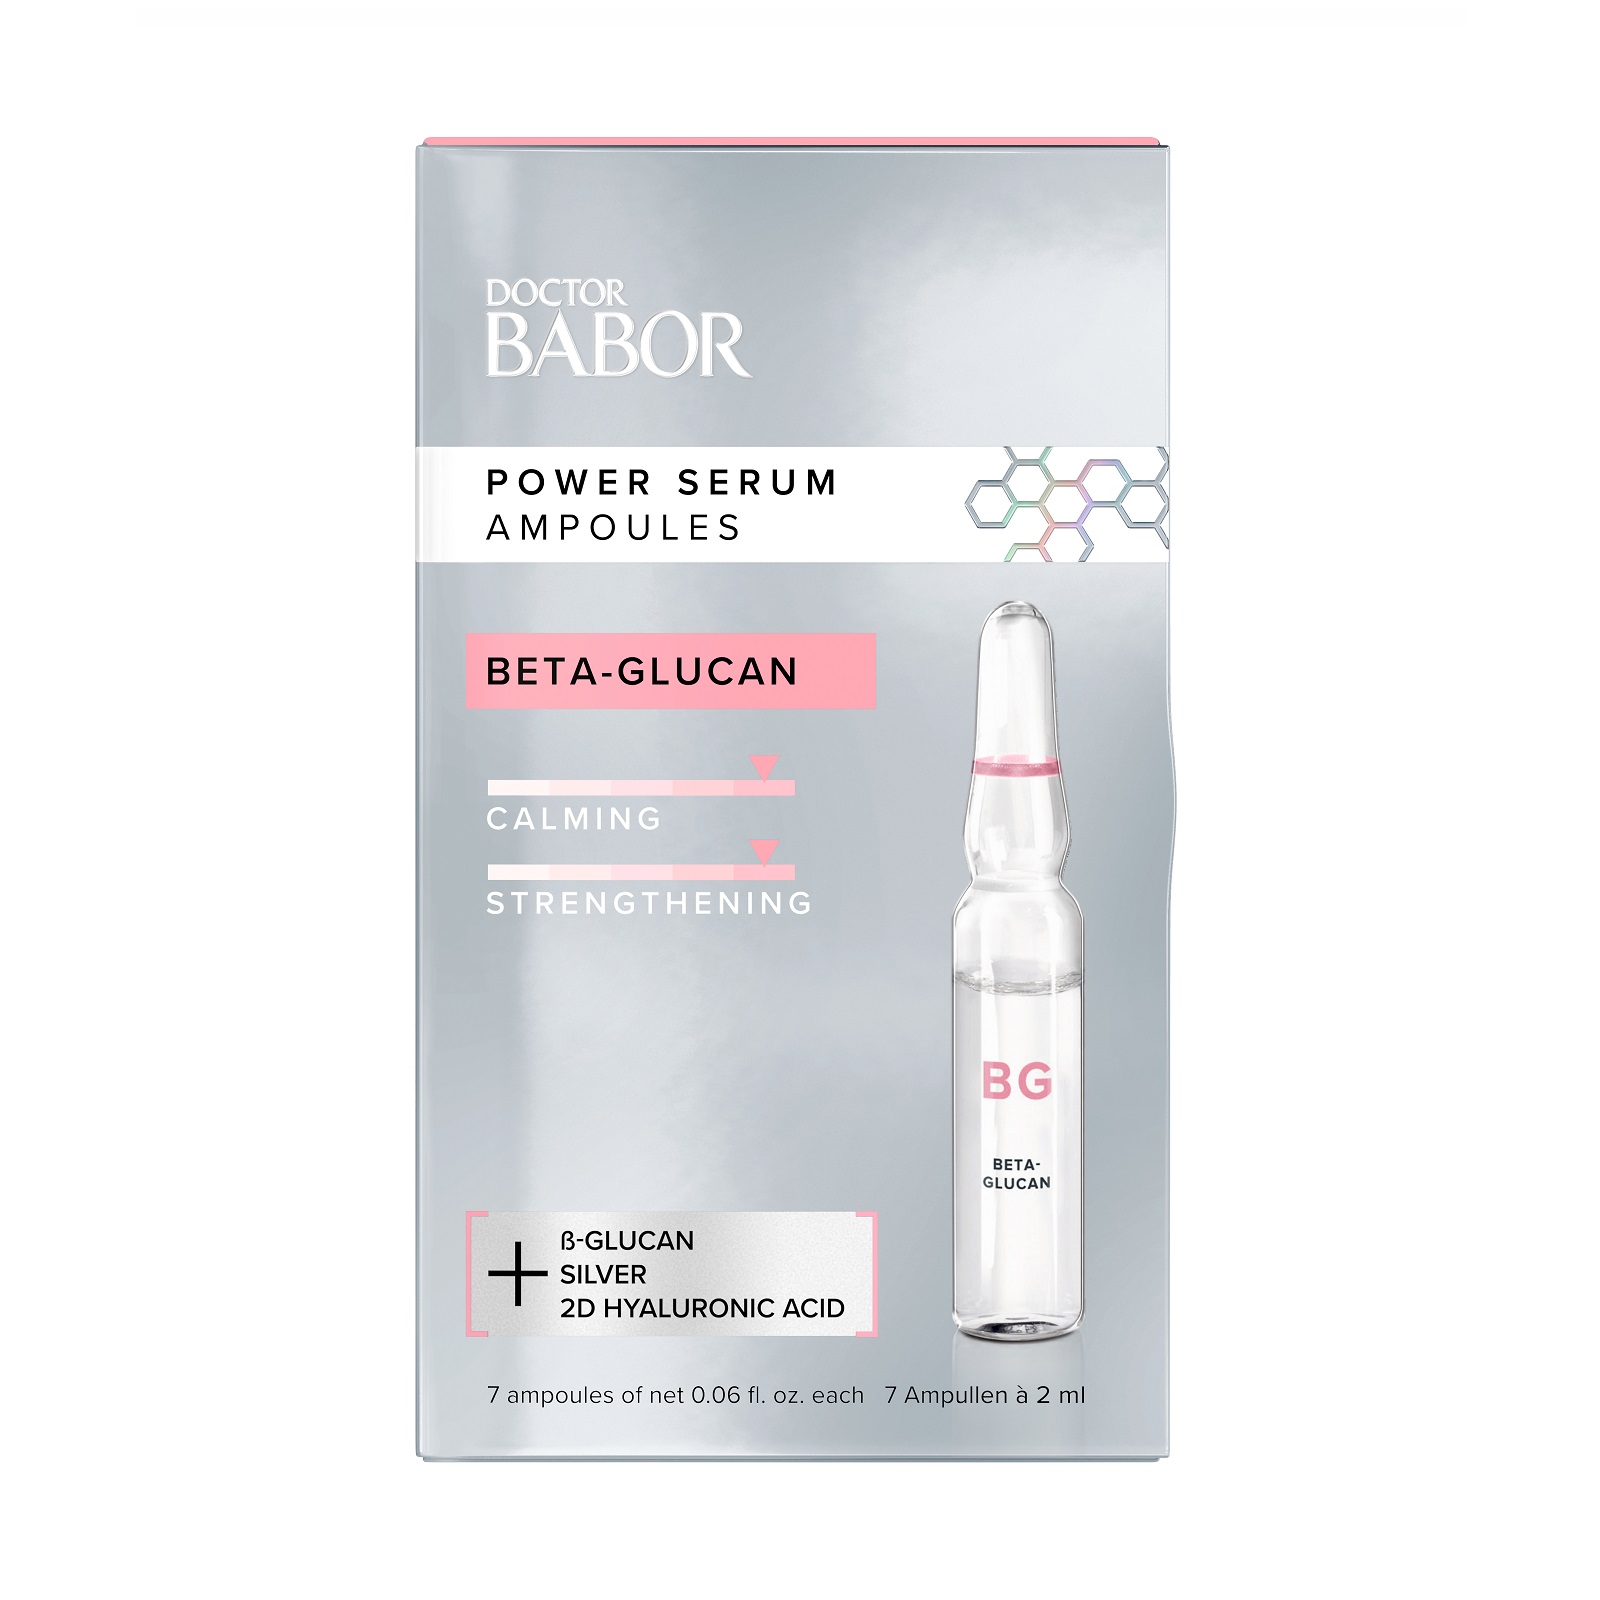 Dr. BABOR Power Serum Ampoules BETA-GLUCAN